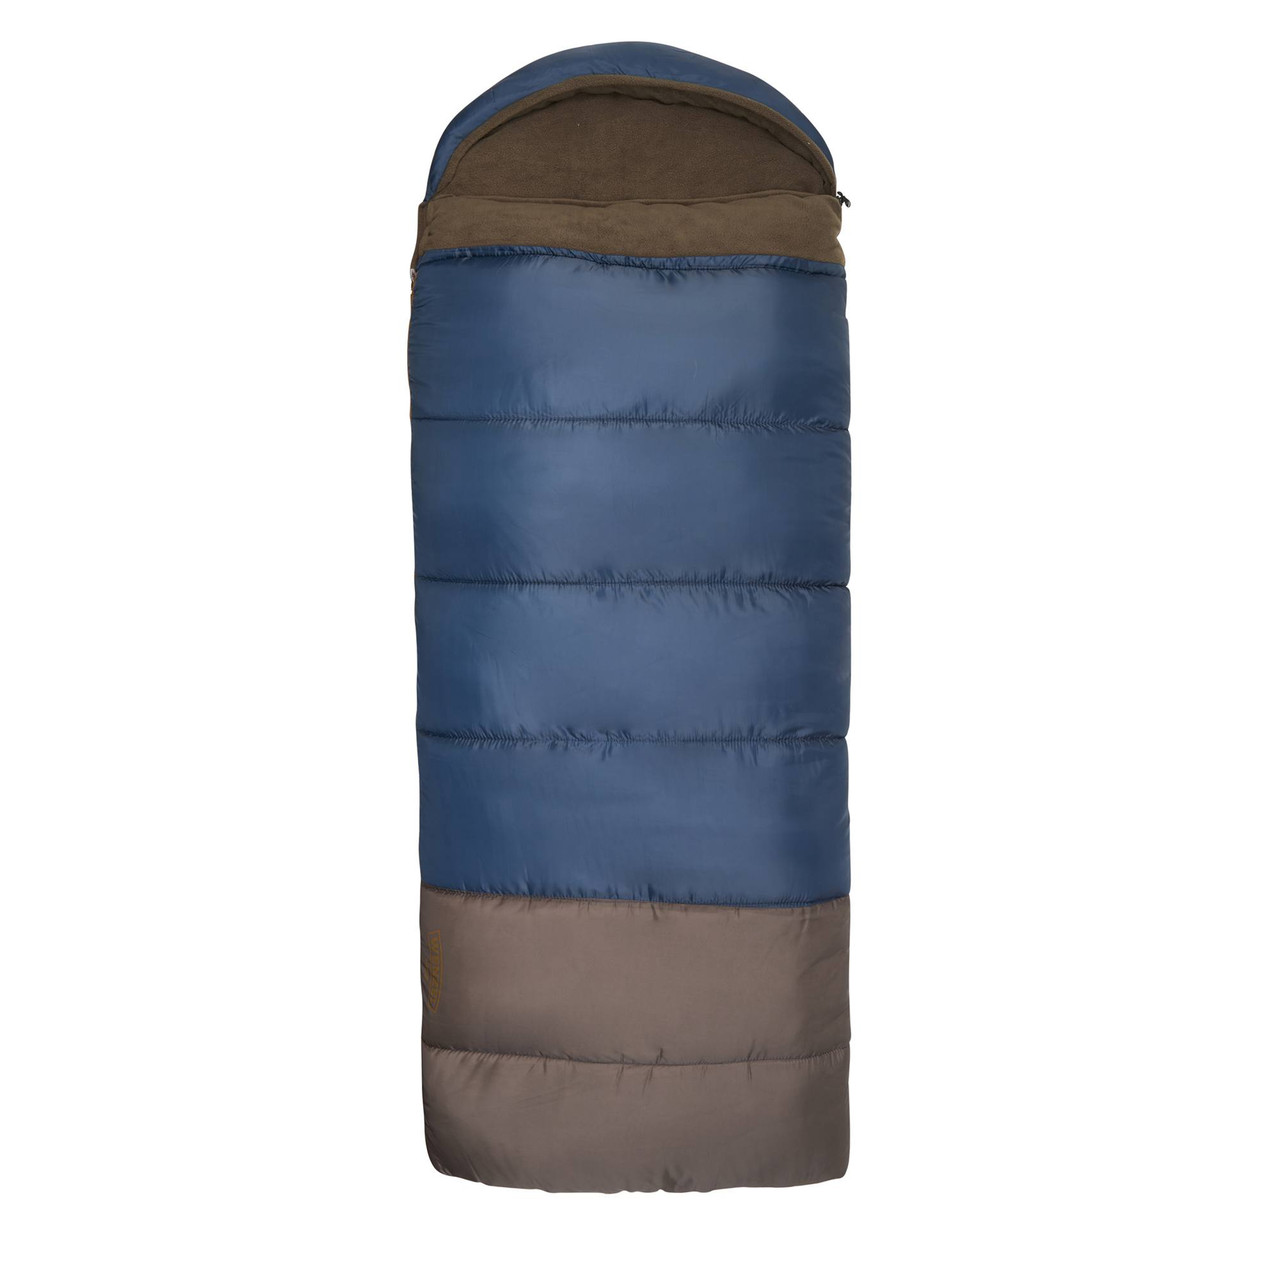 Wenzel Monterey Sleeping Bag, blue, shown fully zipped